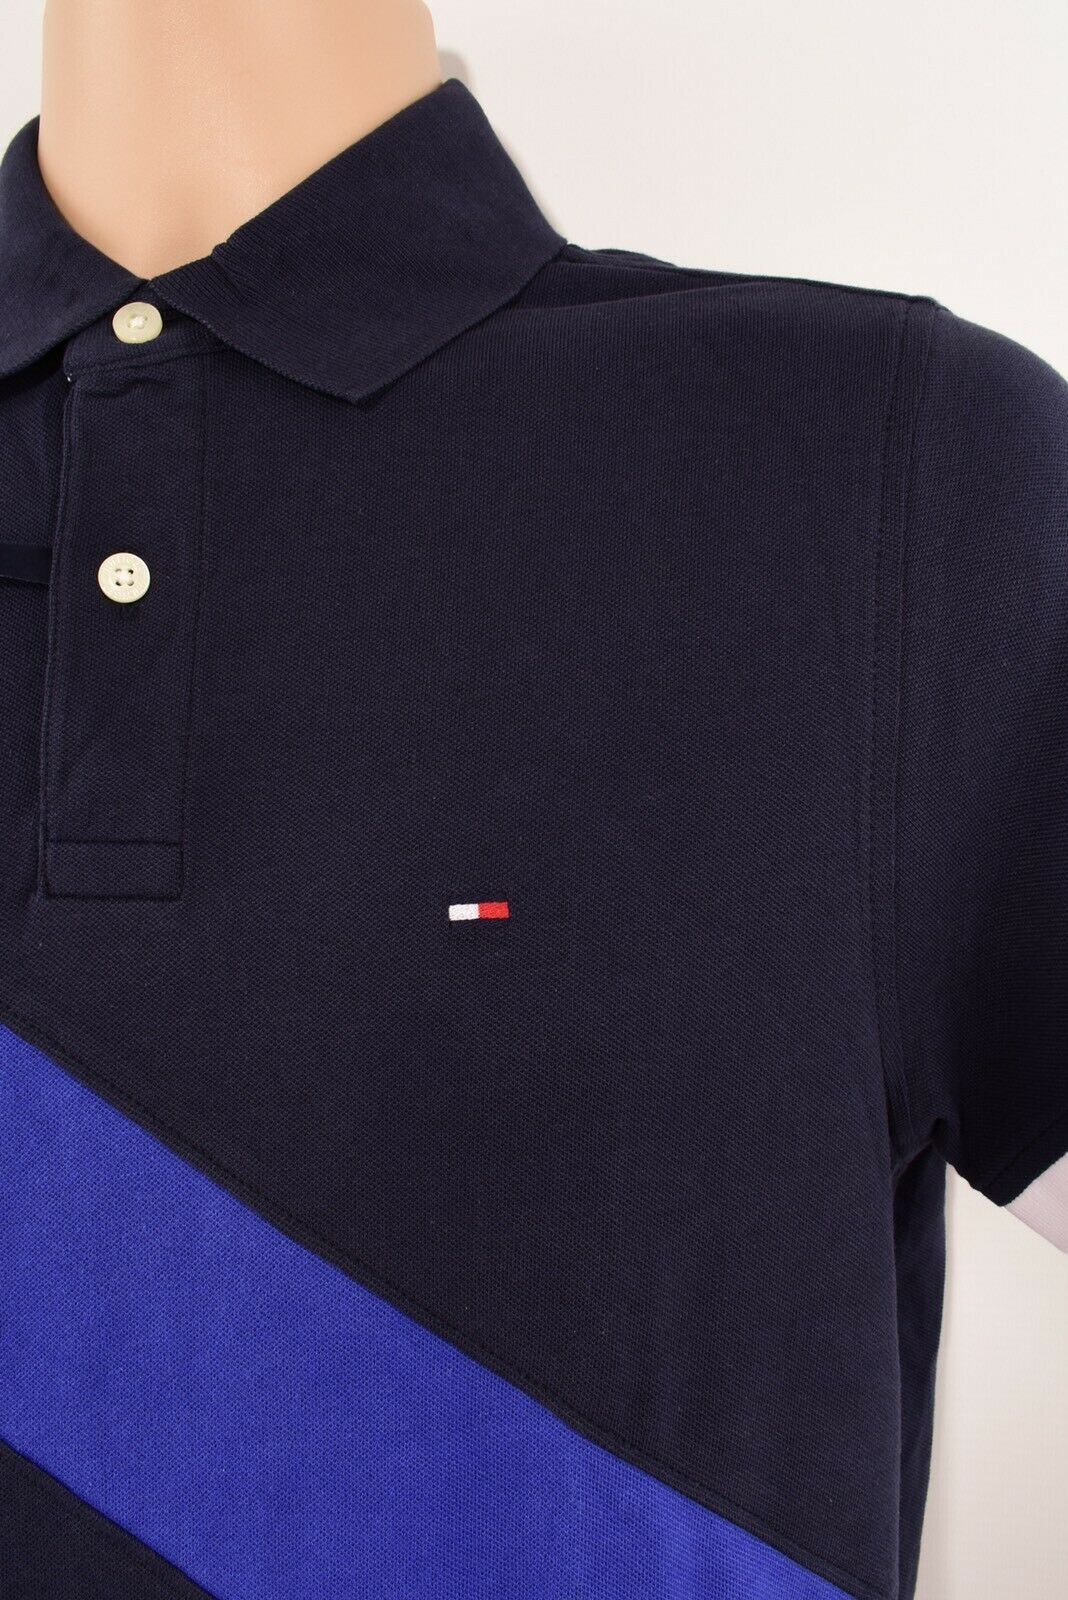 TOMMY HILFIGER Men's TH FLEX Slim Fit Polo Shirt, Navy Blue, size XS /size M